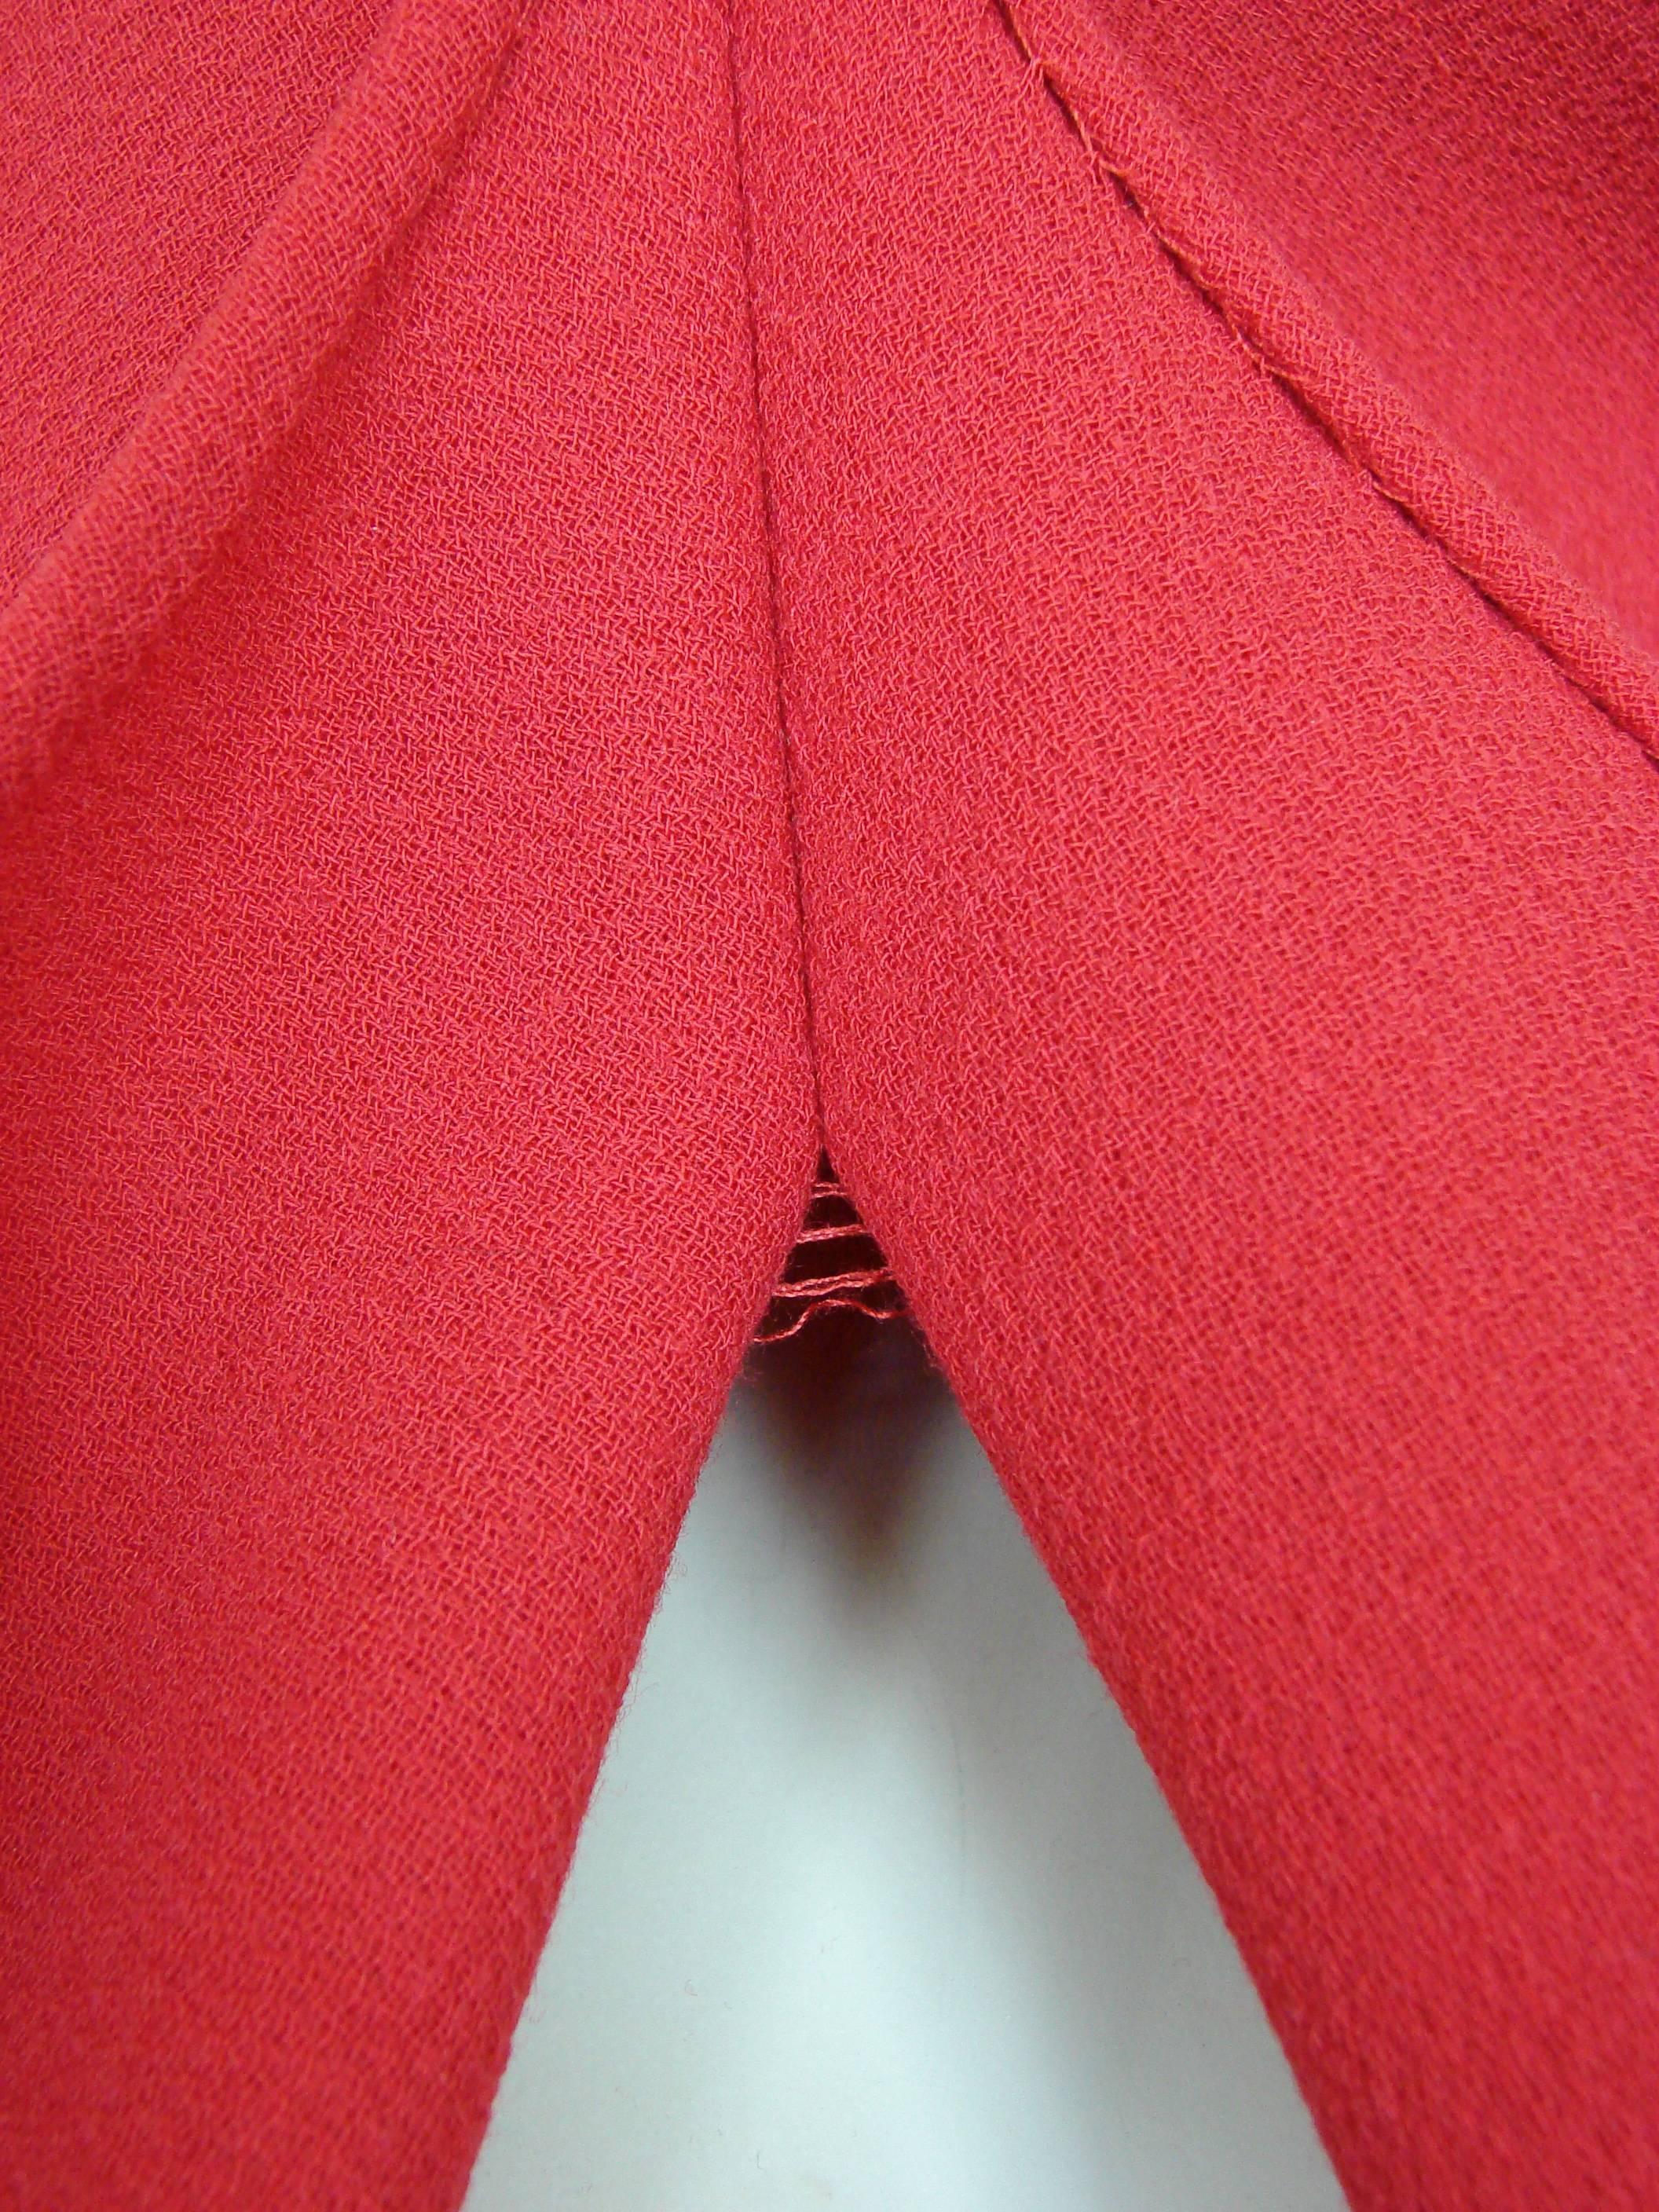 Gianni Versace Couture Red Bustier Dress Long Asymmetric Hem 1990s Sz S/M 6